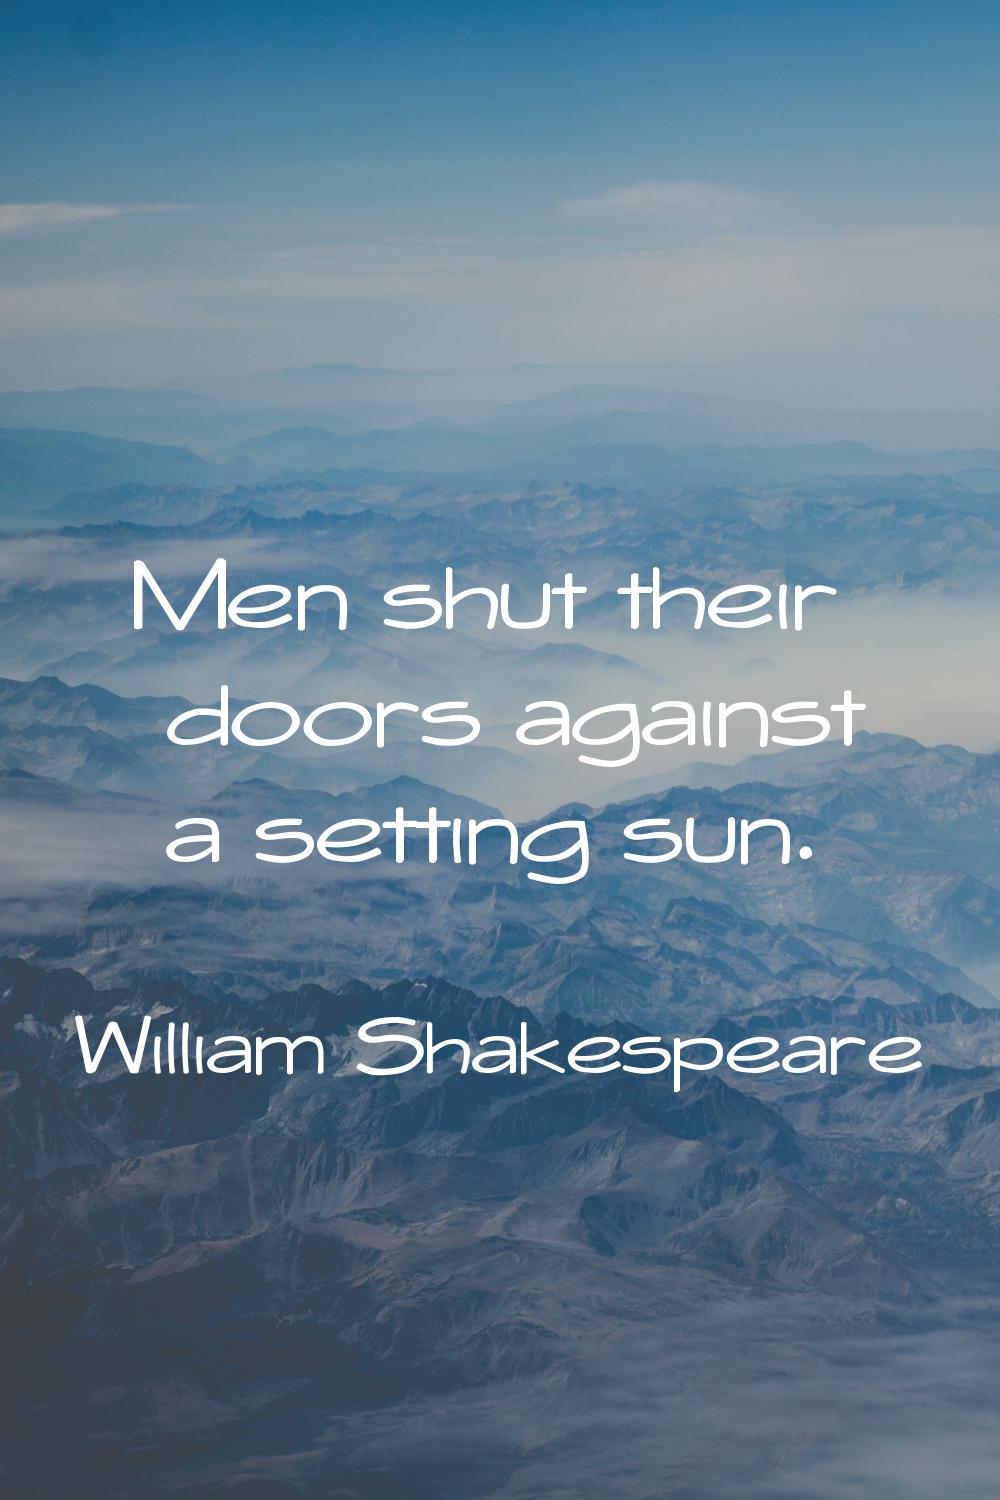 Men shut their doors against a setting sun.